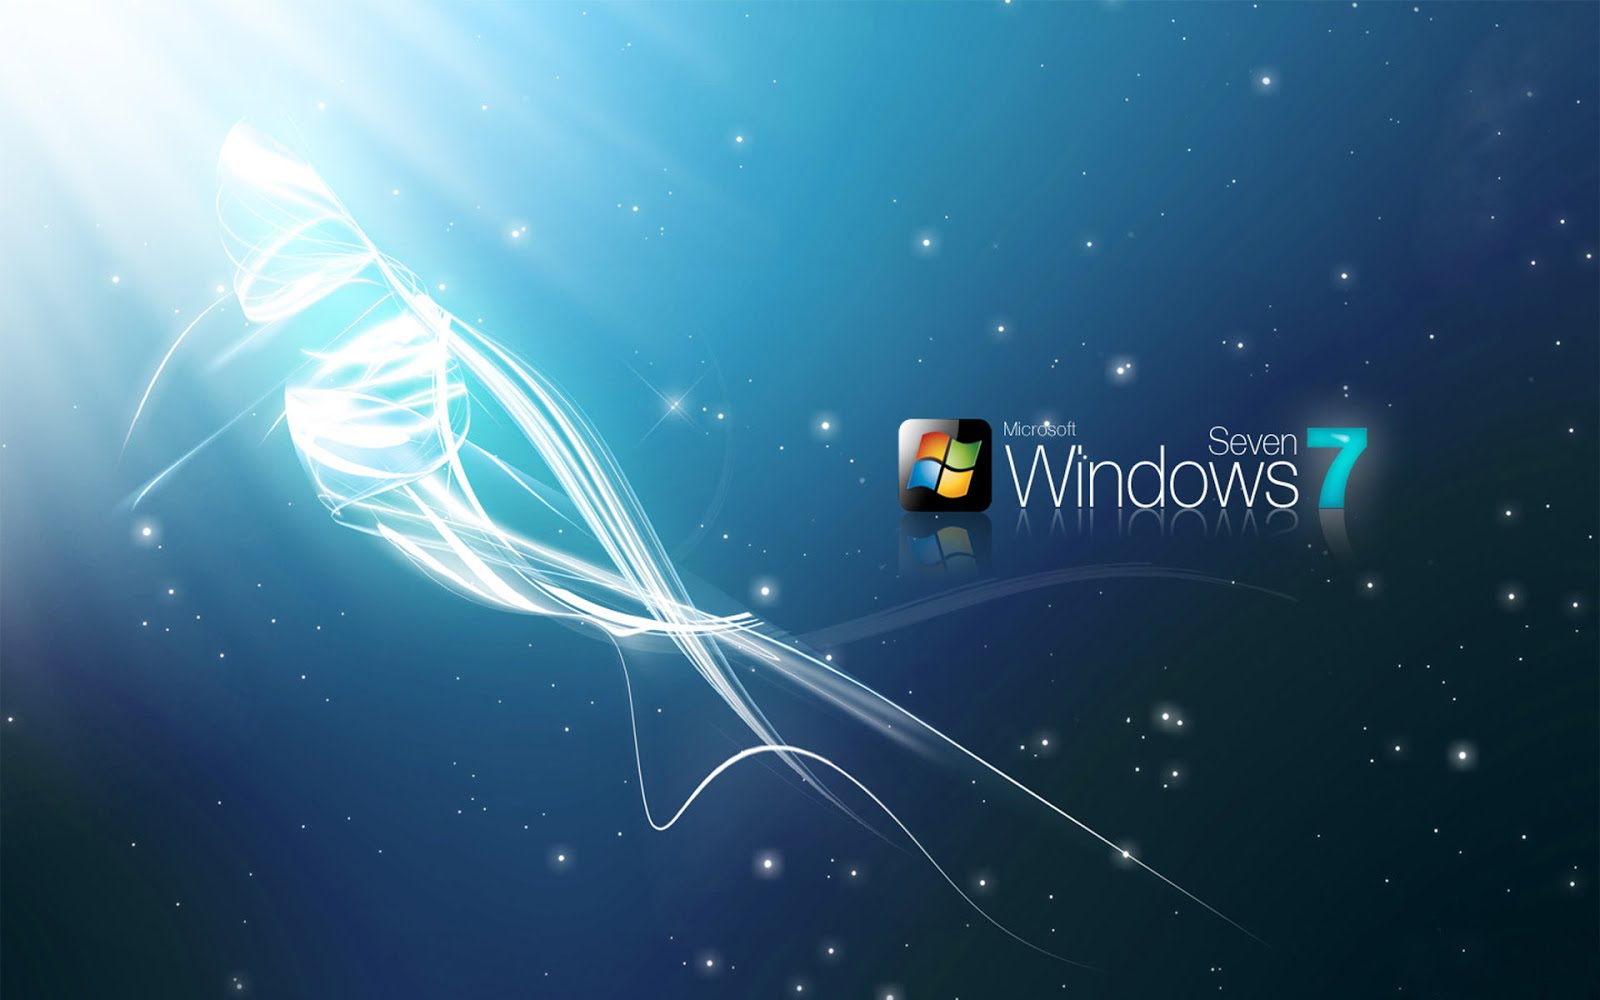 Free Windows 7 Desktop Backgrounds